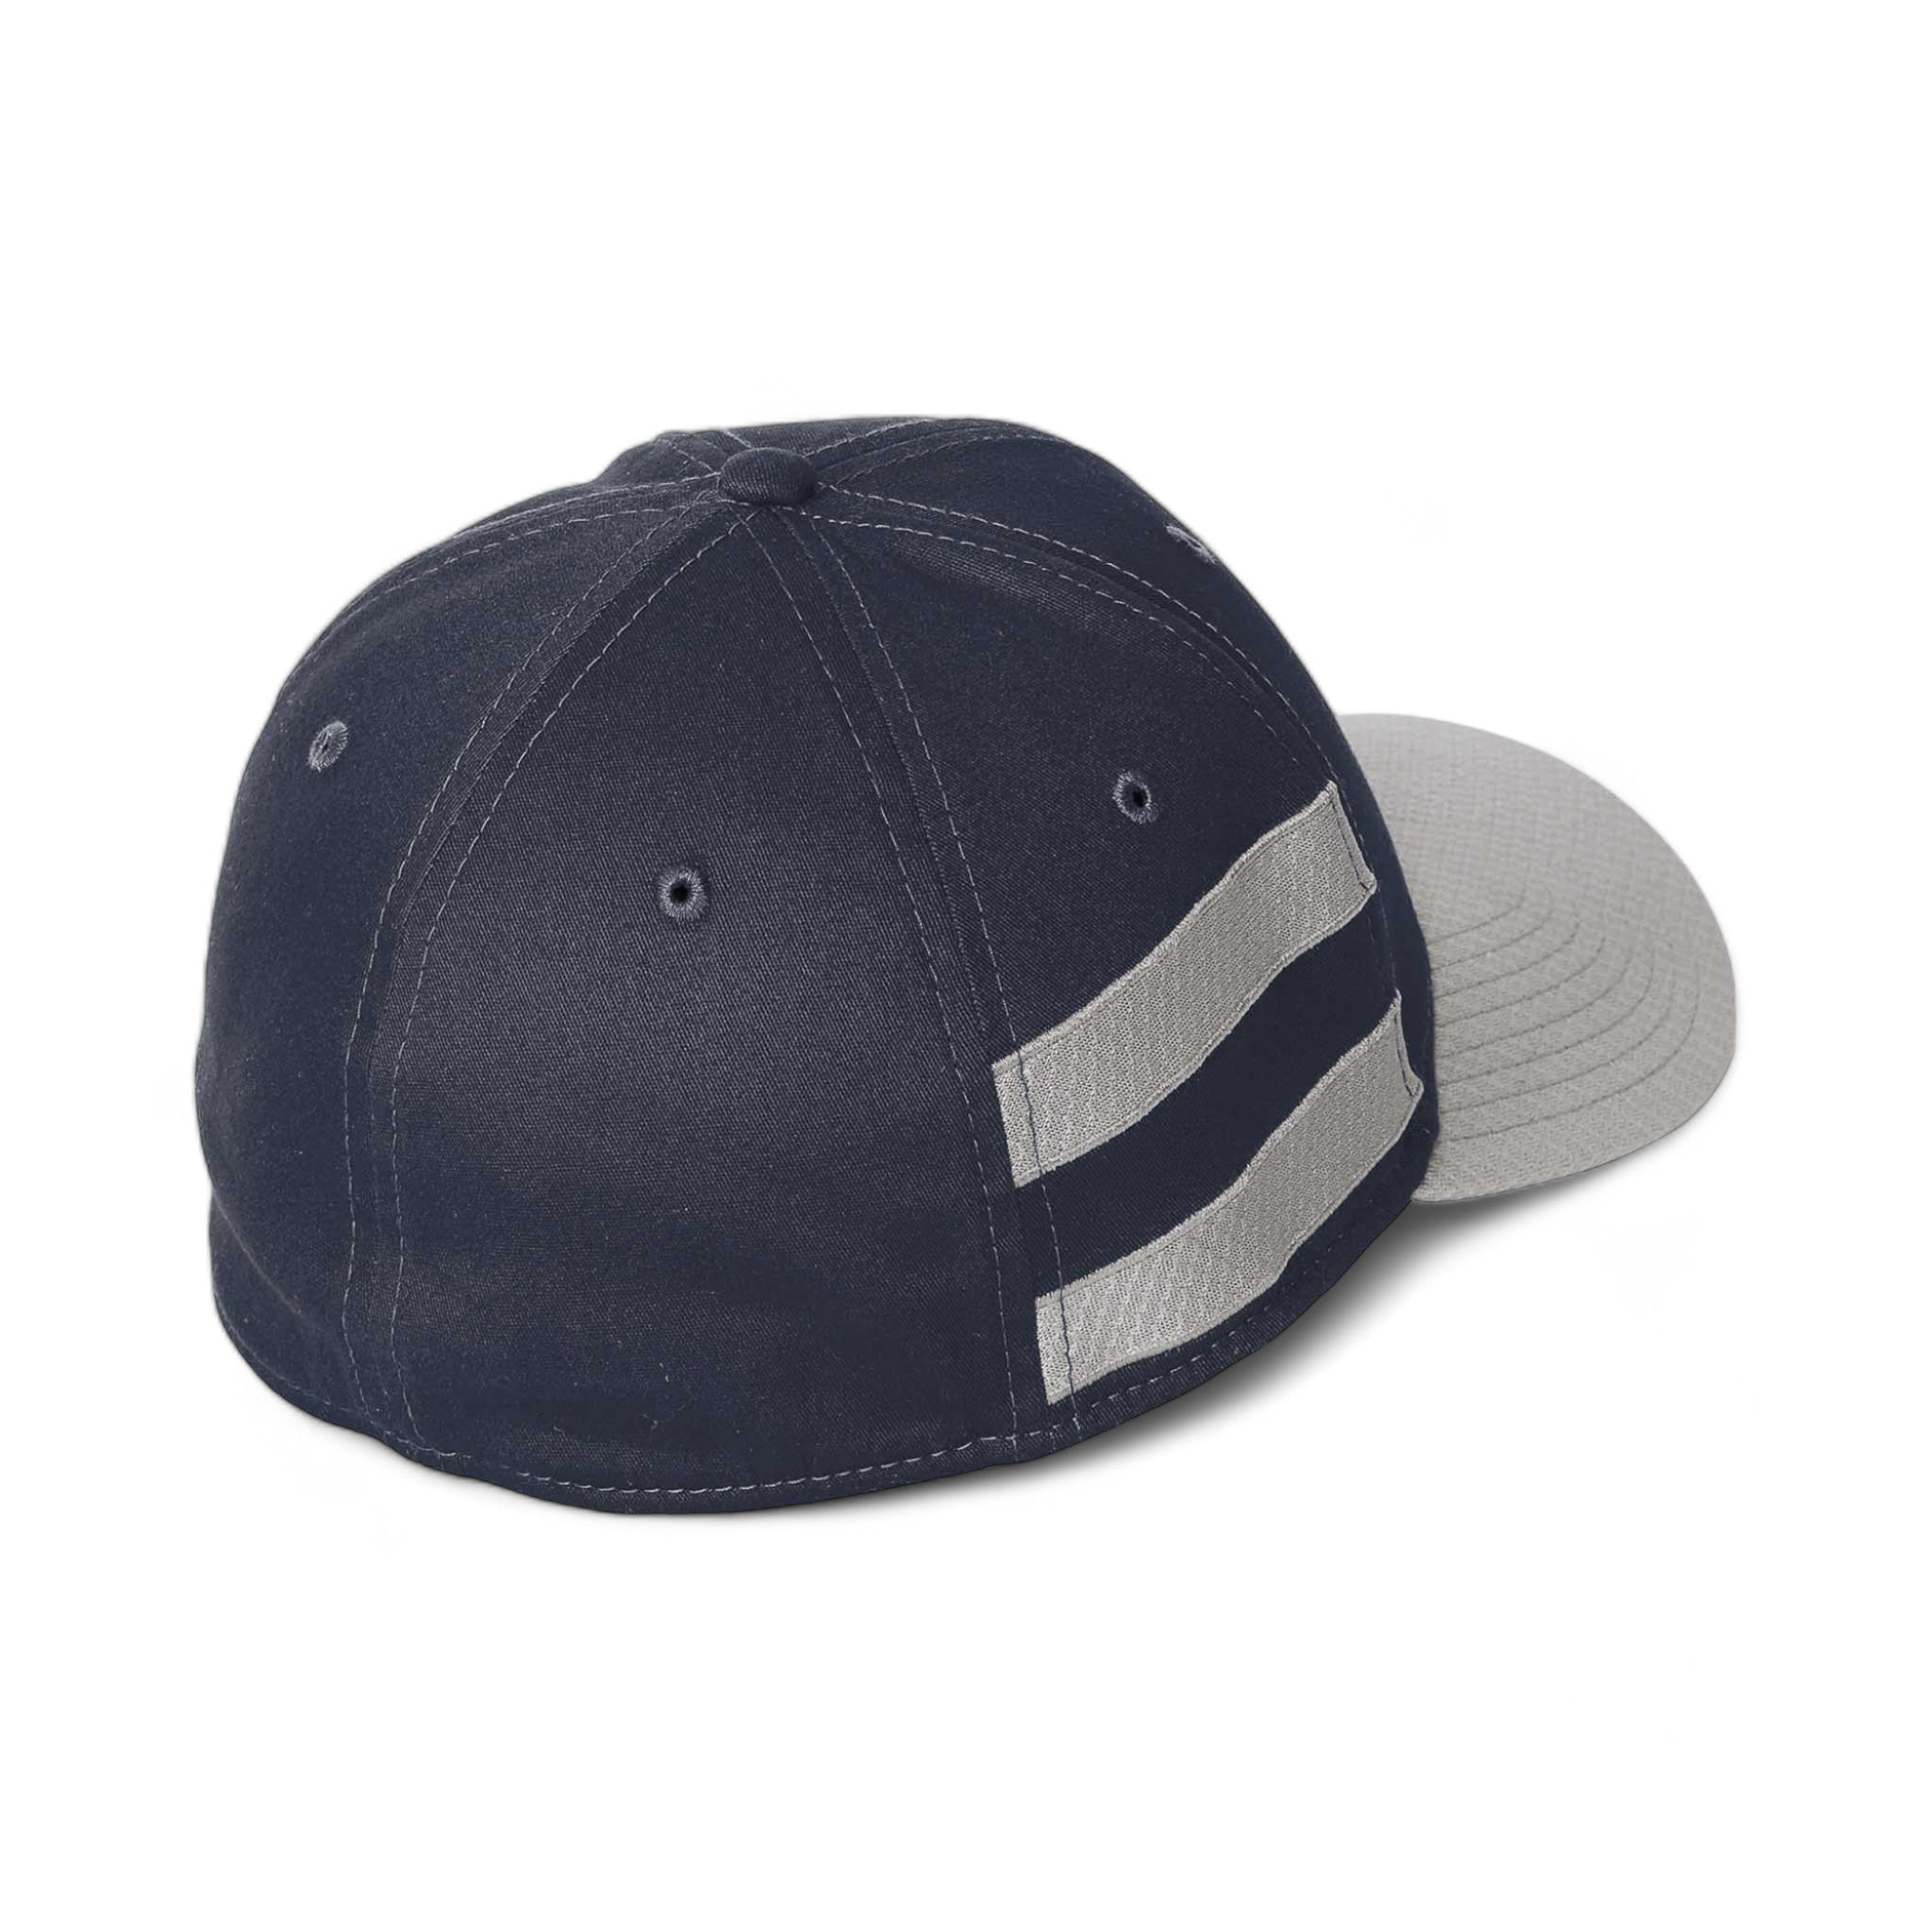 Back view of New Era NE1122 custom hat in deep navy and grey